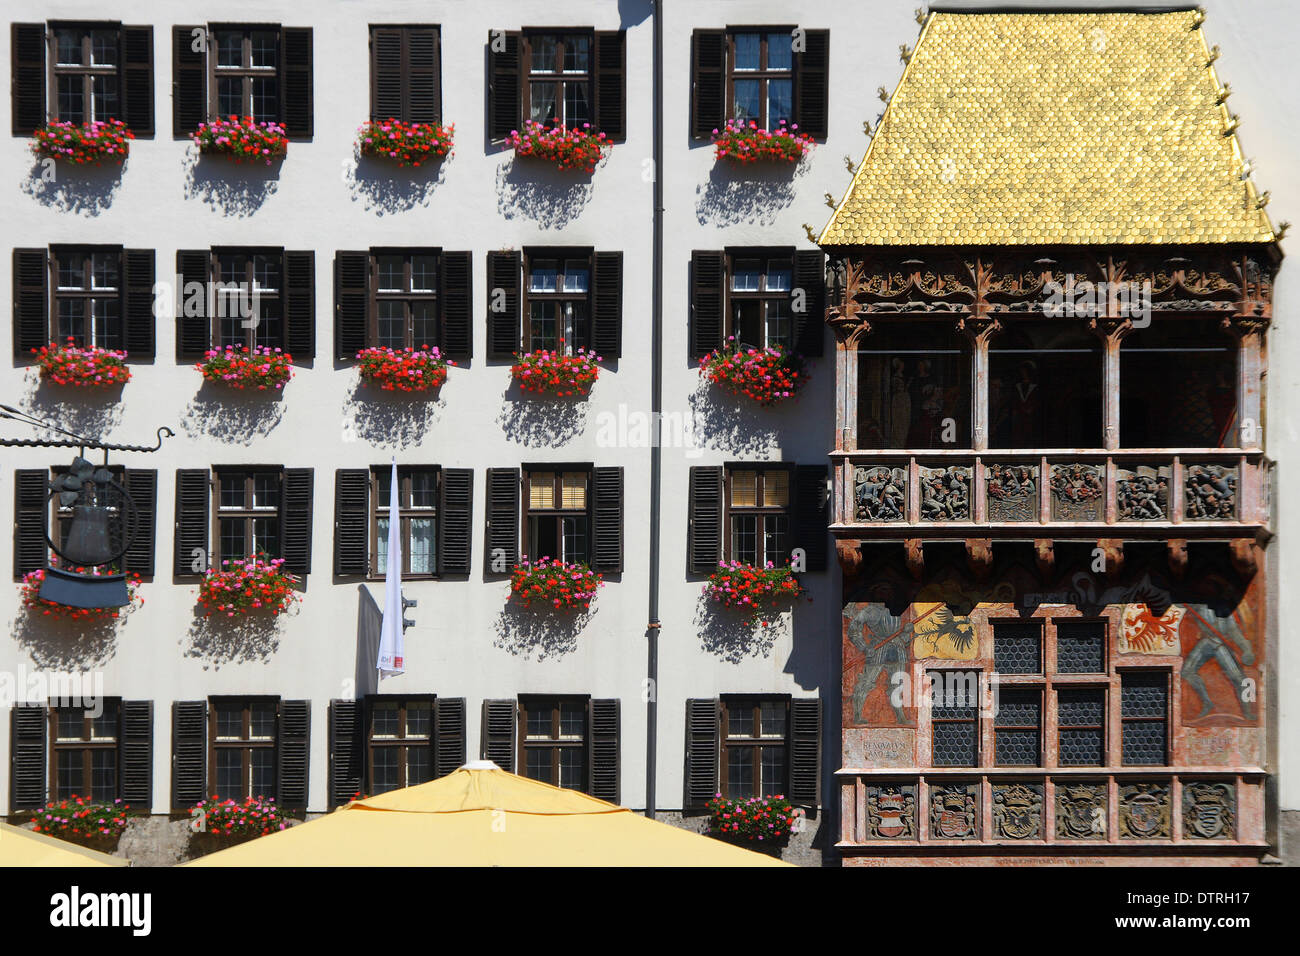 The Golden Roof (Goldenes Dachl), a landmark in Innsbruck, Austria. Stock Photo